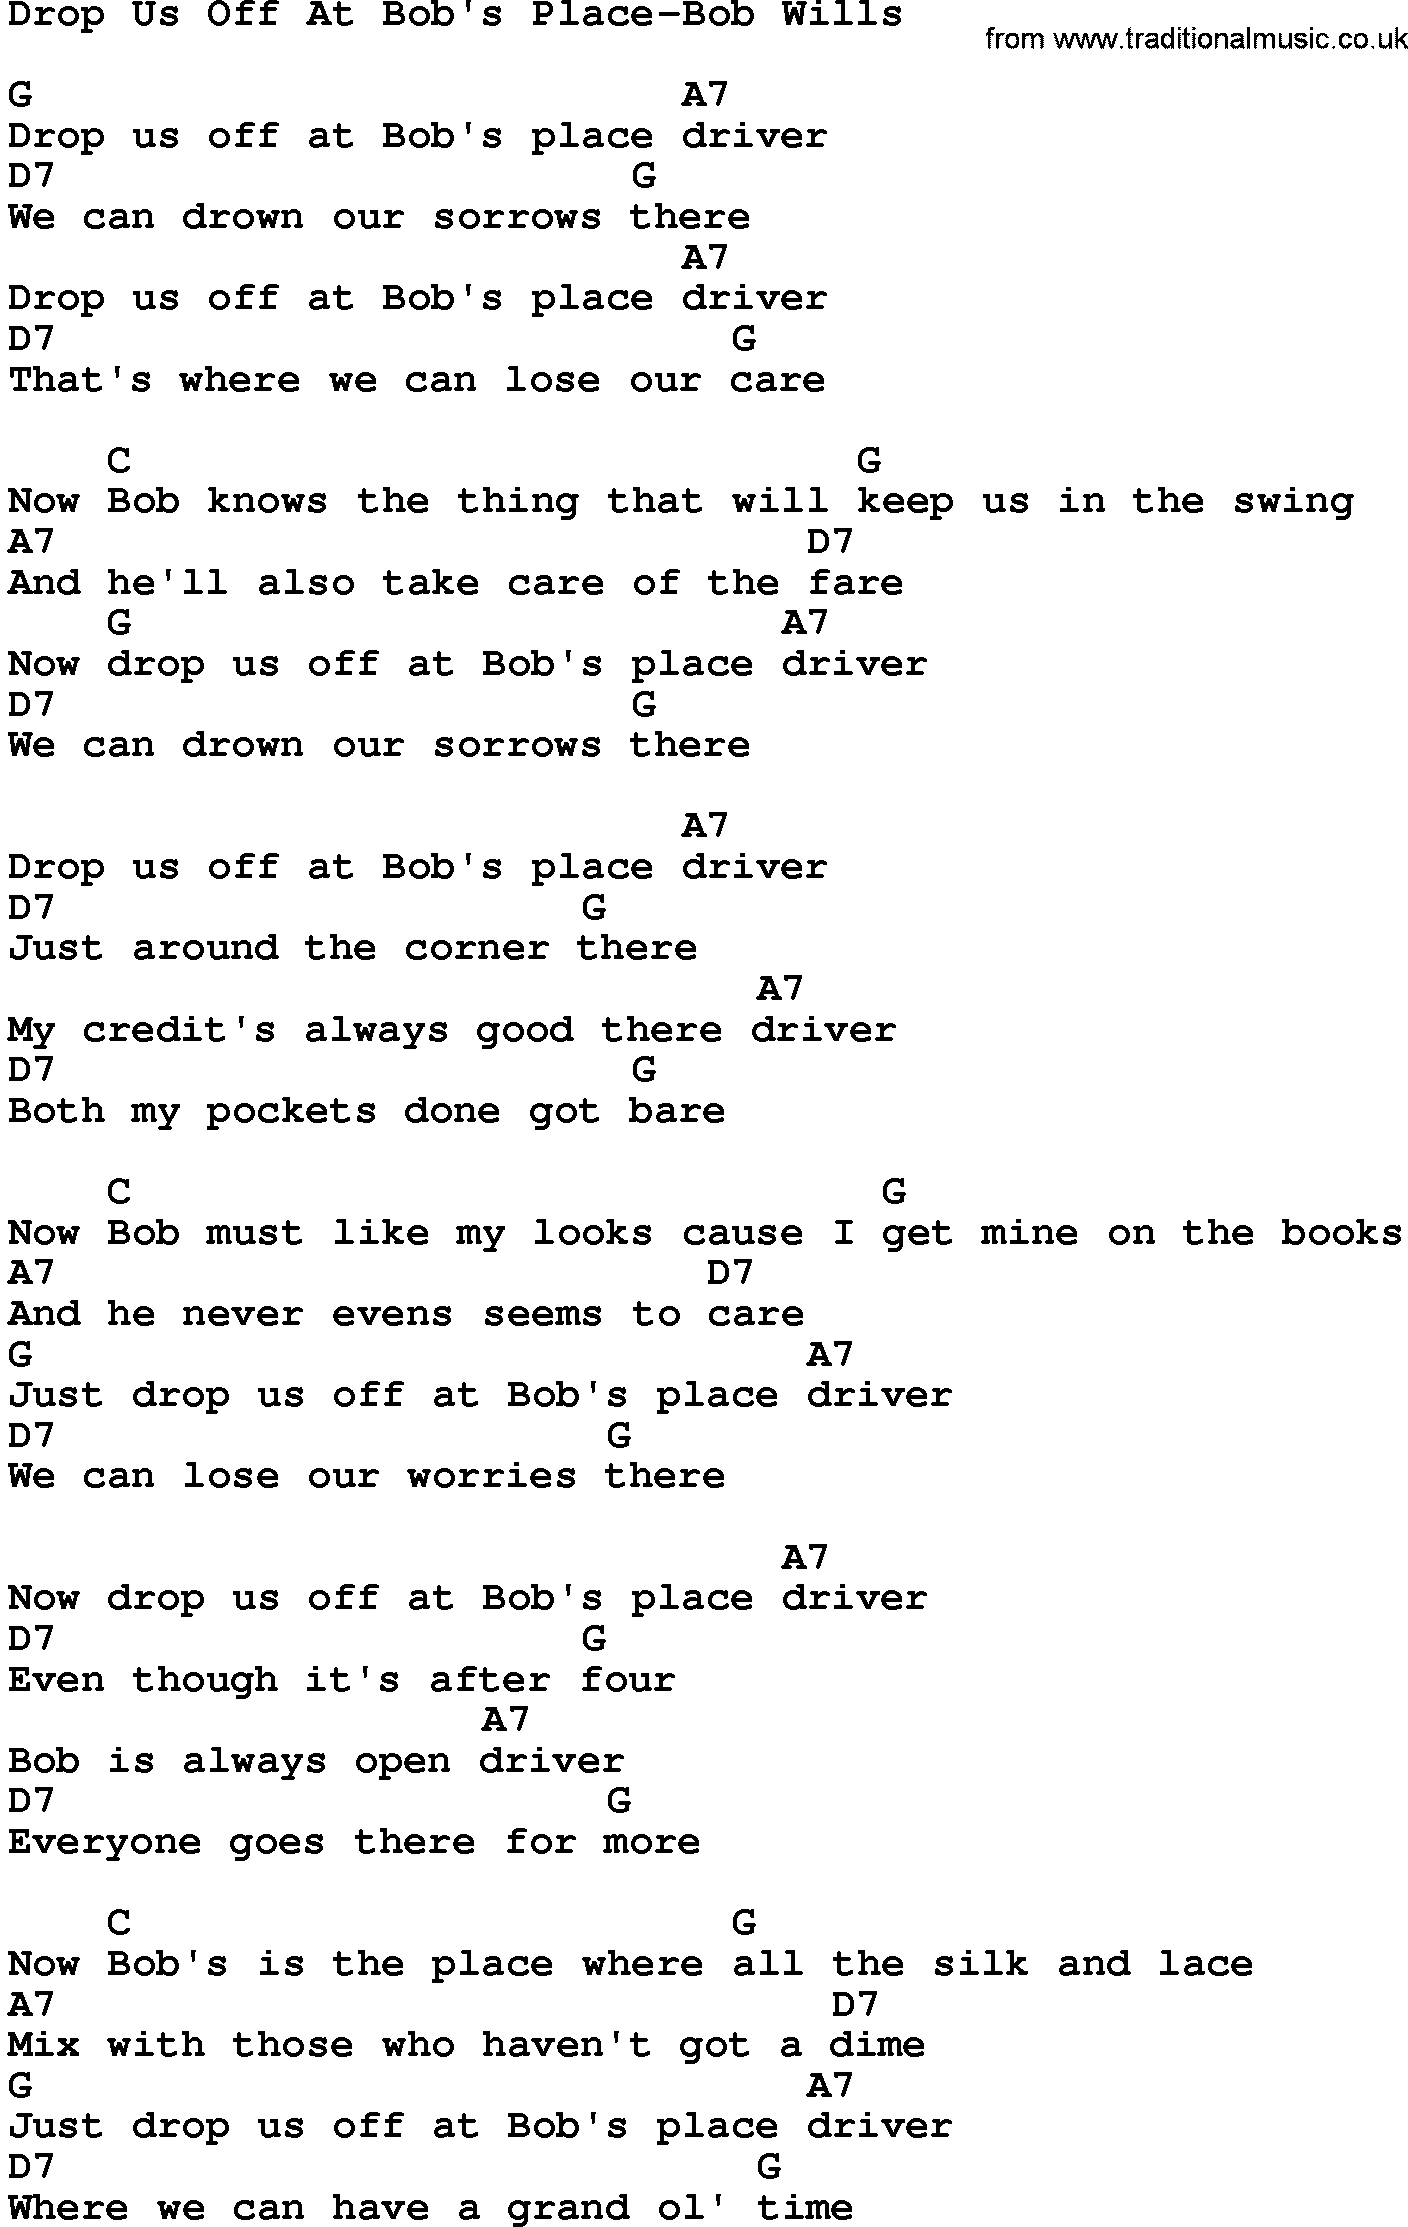 Country music song: Drop Us Off At Bob's Place-Bob Wills lyrics and chords